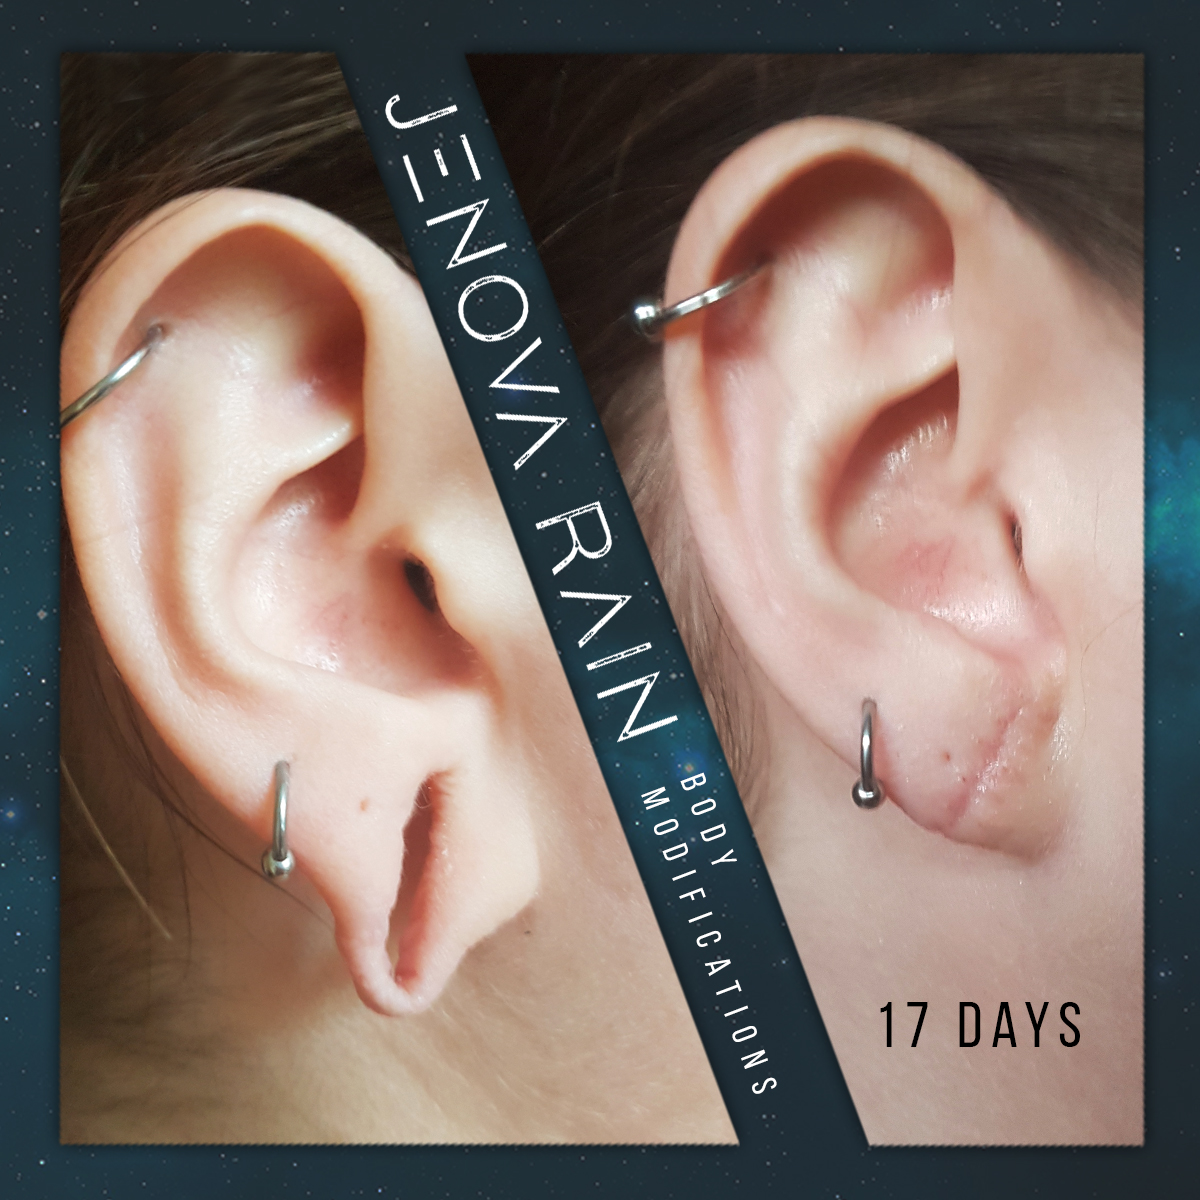 Stretched Ear Lobe Hole Repair UK by Jenova Rain